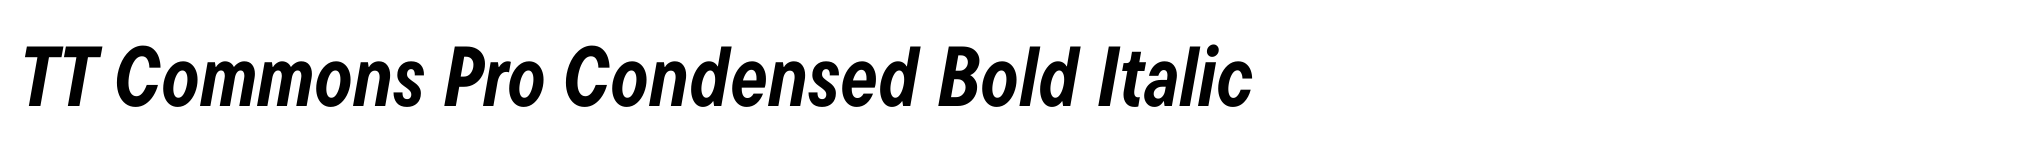 TT Commons Pro Condensed Bold Italic image